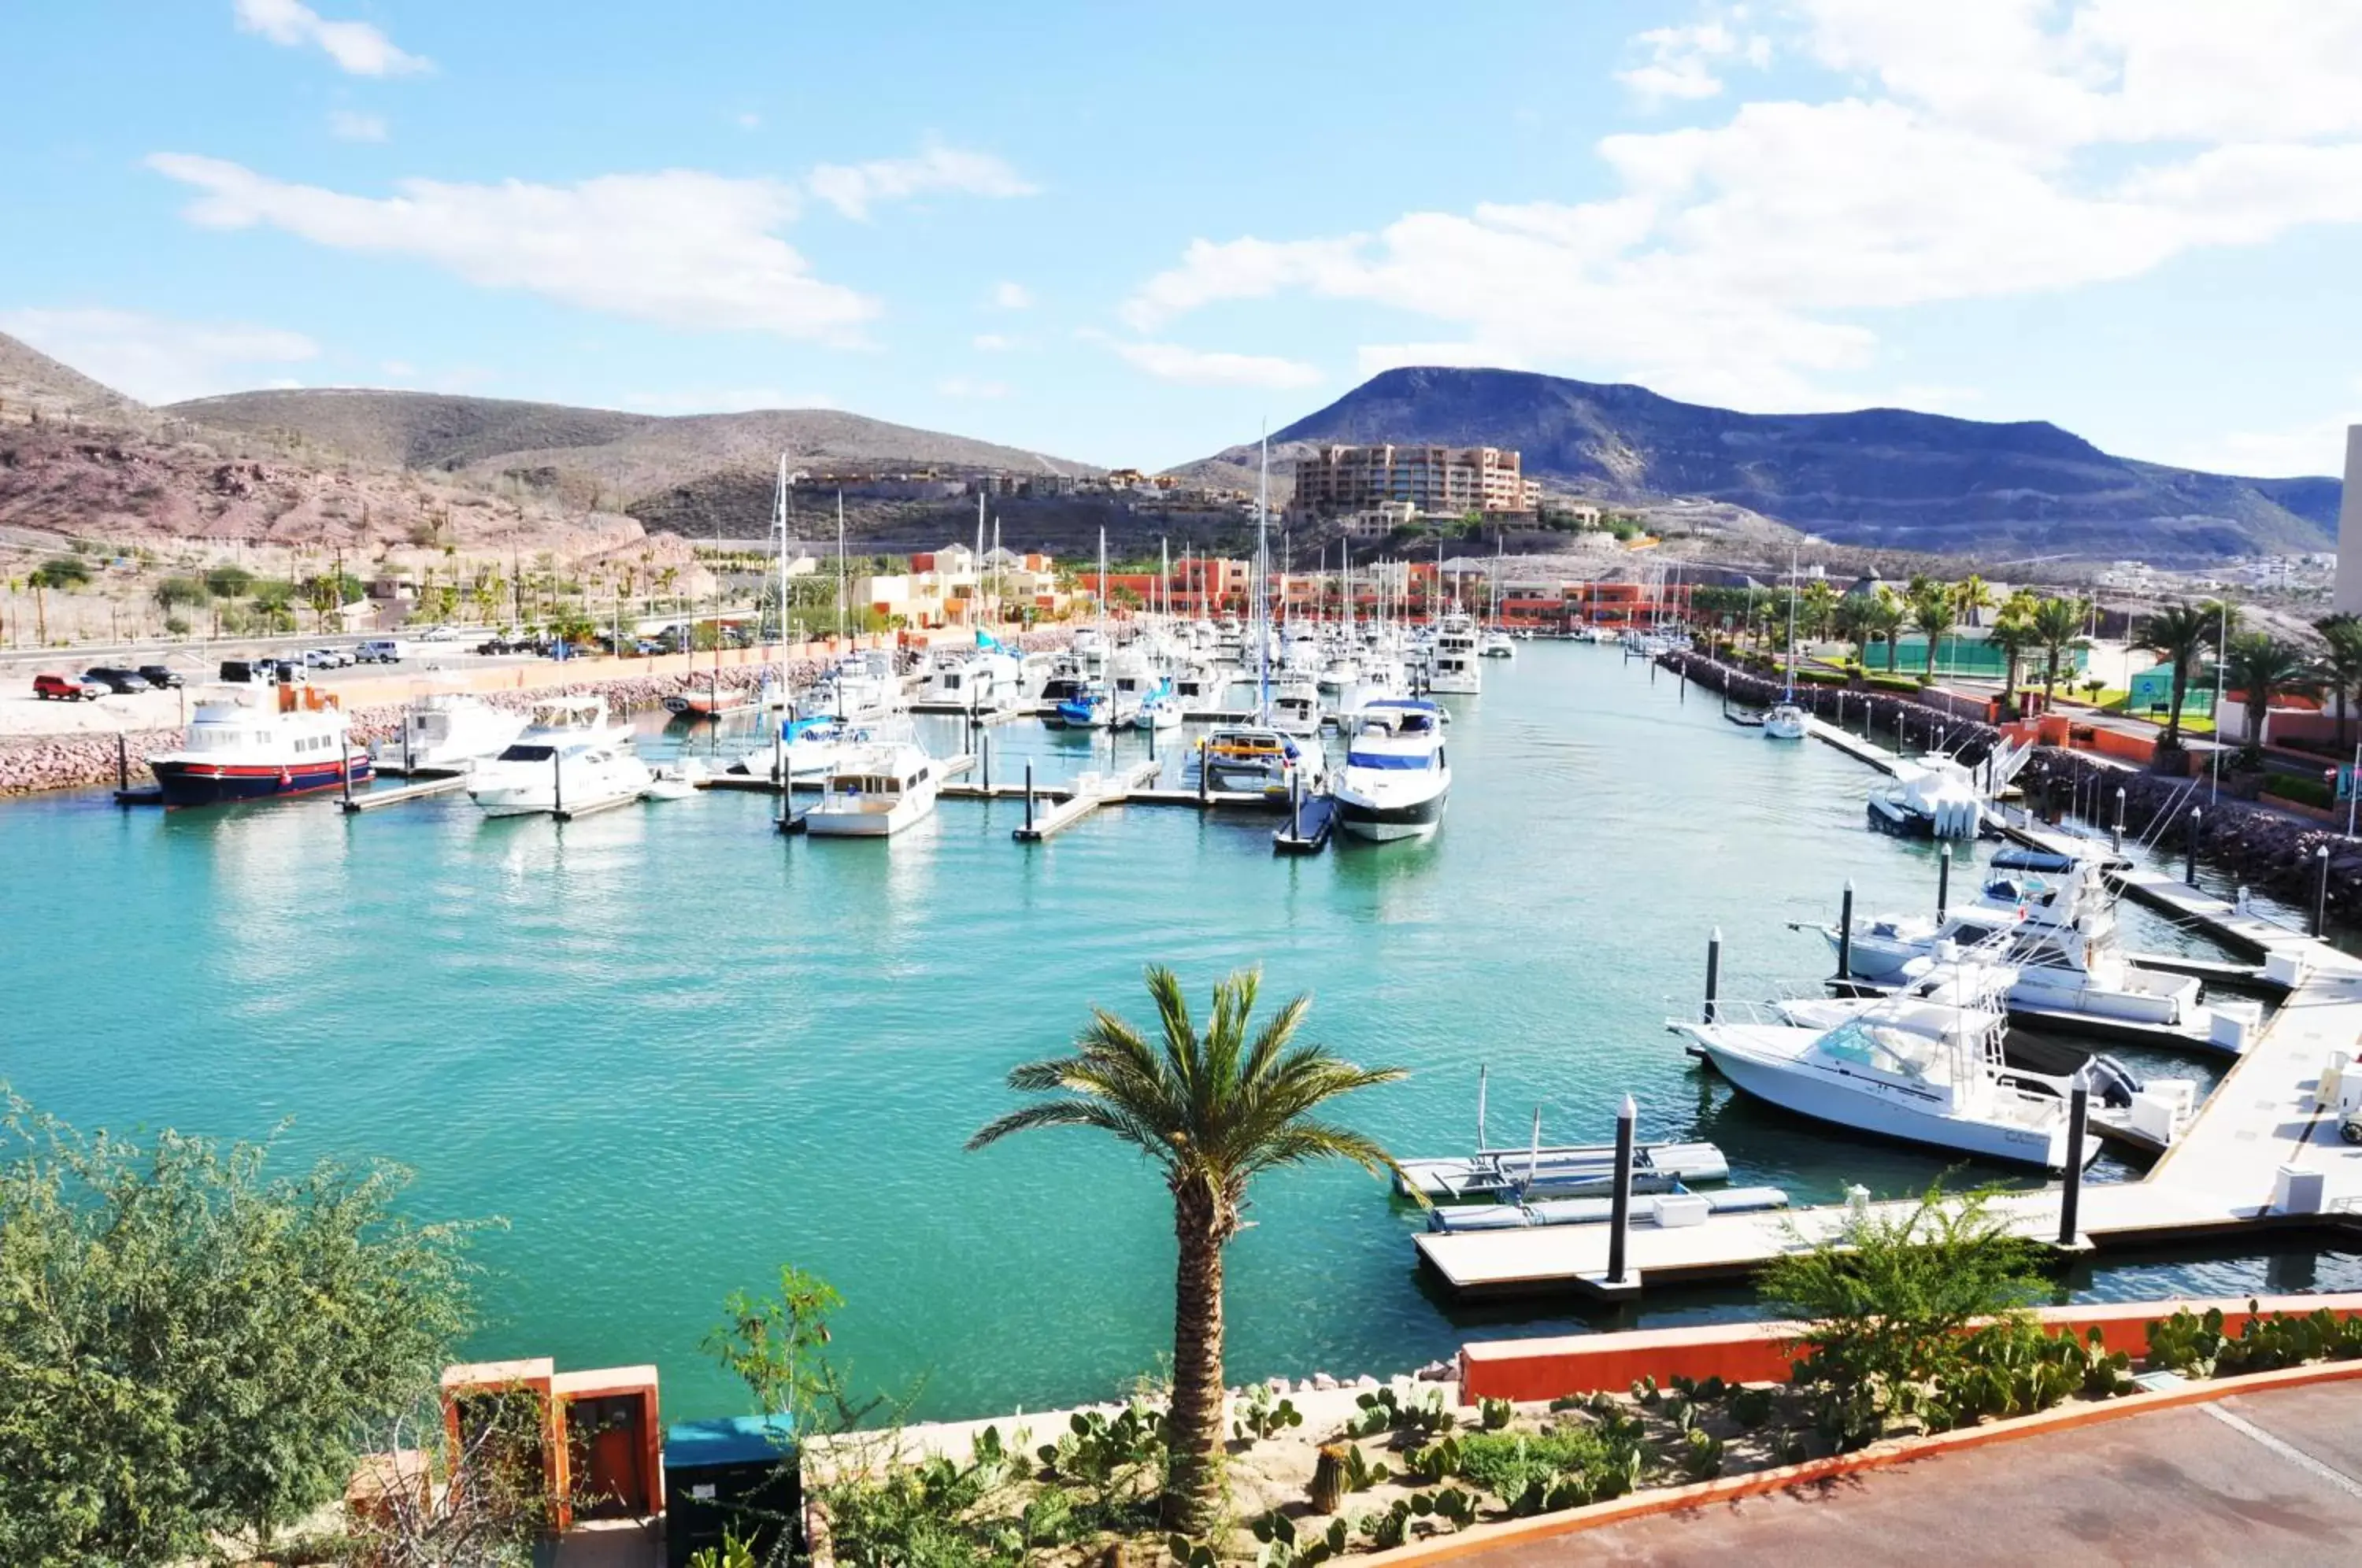 Area and facilities in Costa Baja Resort & Spa